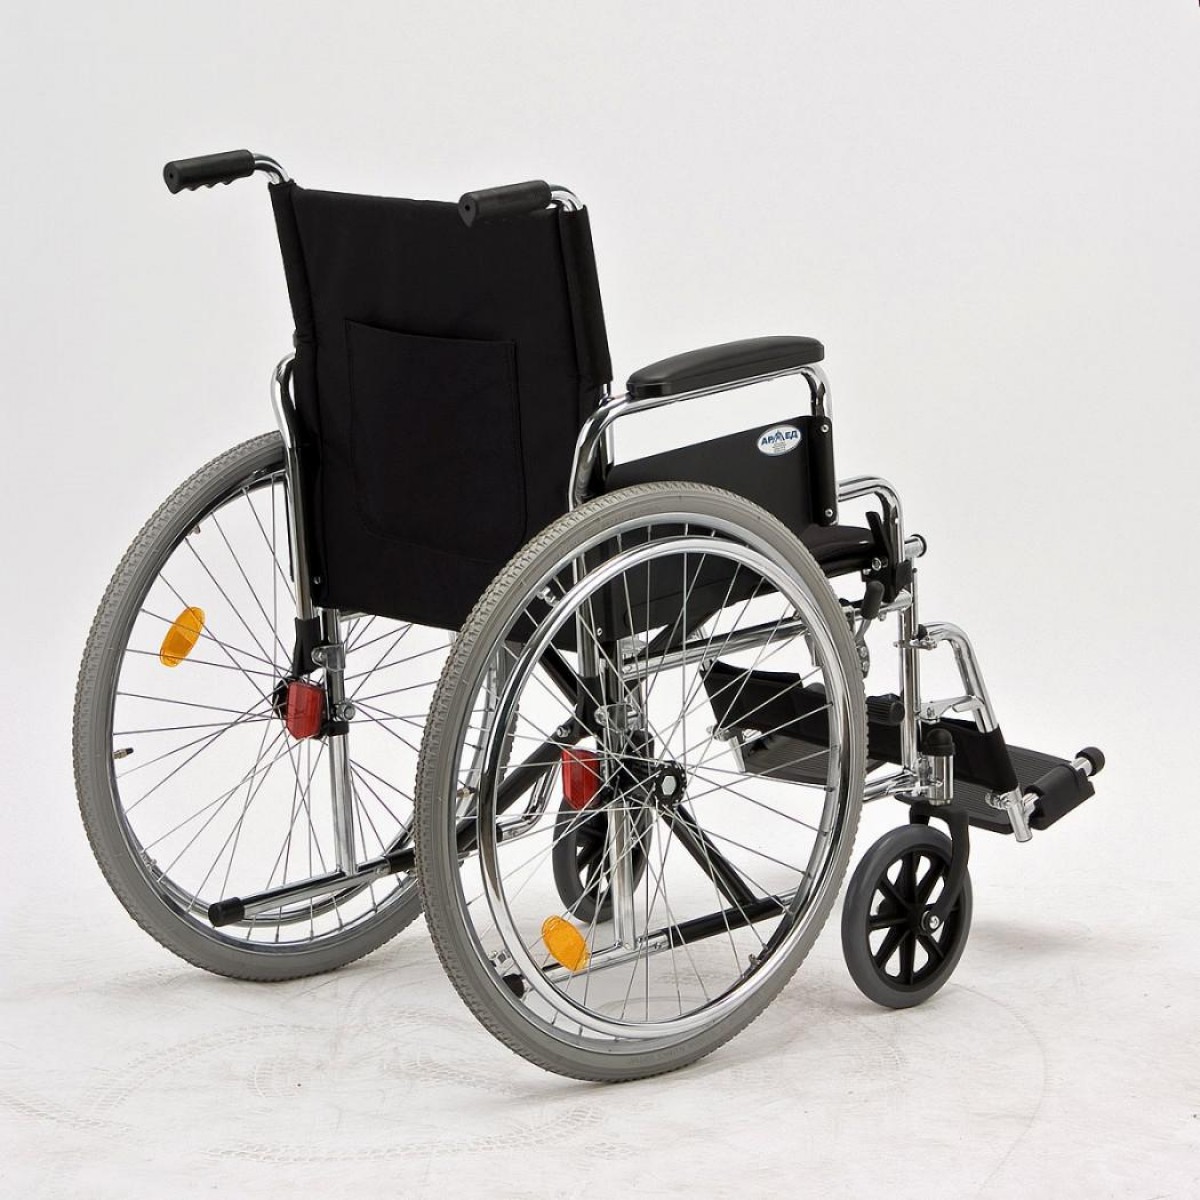 Кресло-коляска для инвалидов Армед н010. Кресло-коляска Армед h 007. Инвалидная коляска Армед н035. Инвалидная коляска Armed h002. Прокат колясок для инвалидов